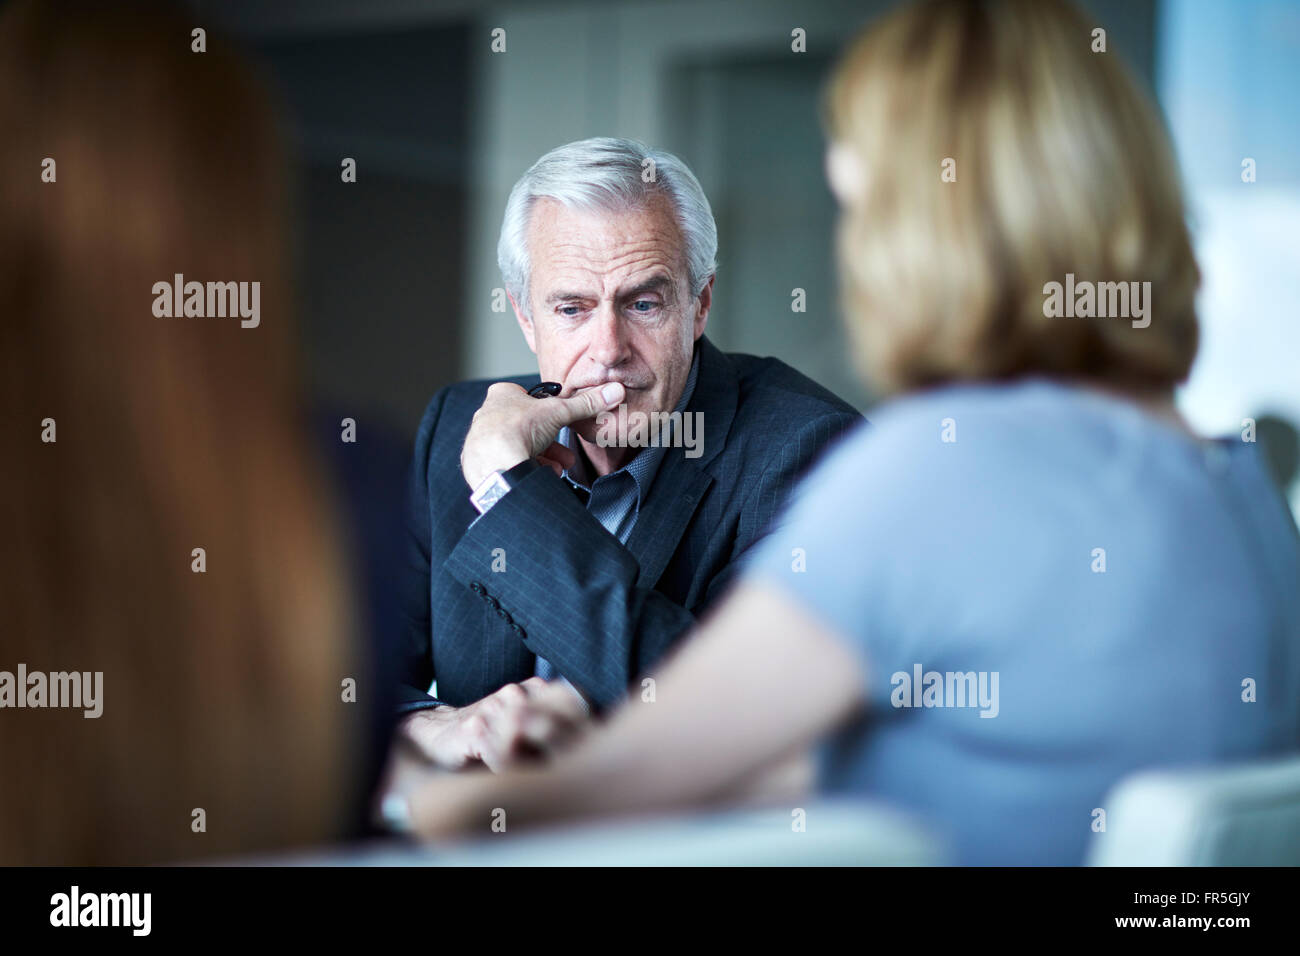 Serious senior businessman looking down in meeting Stock Photo